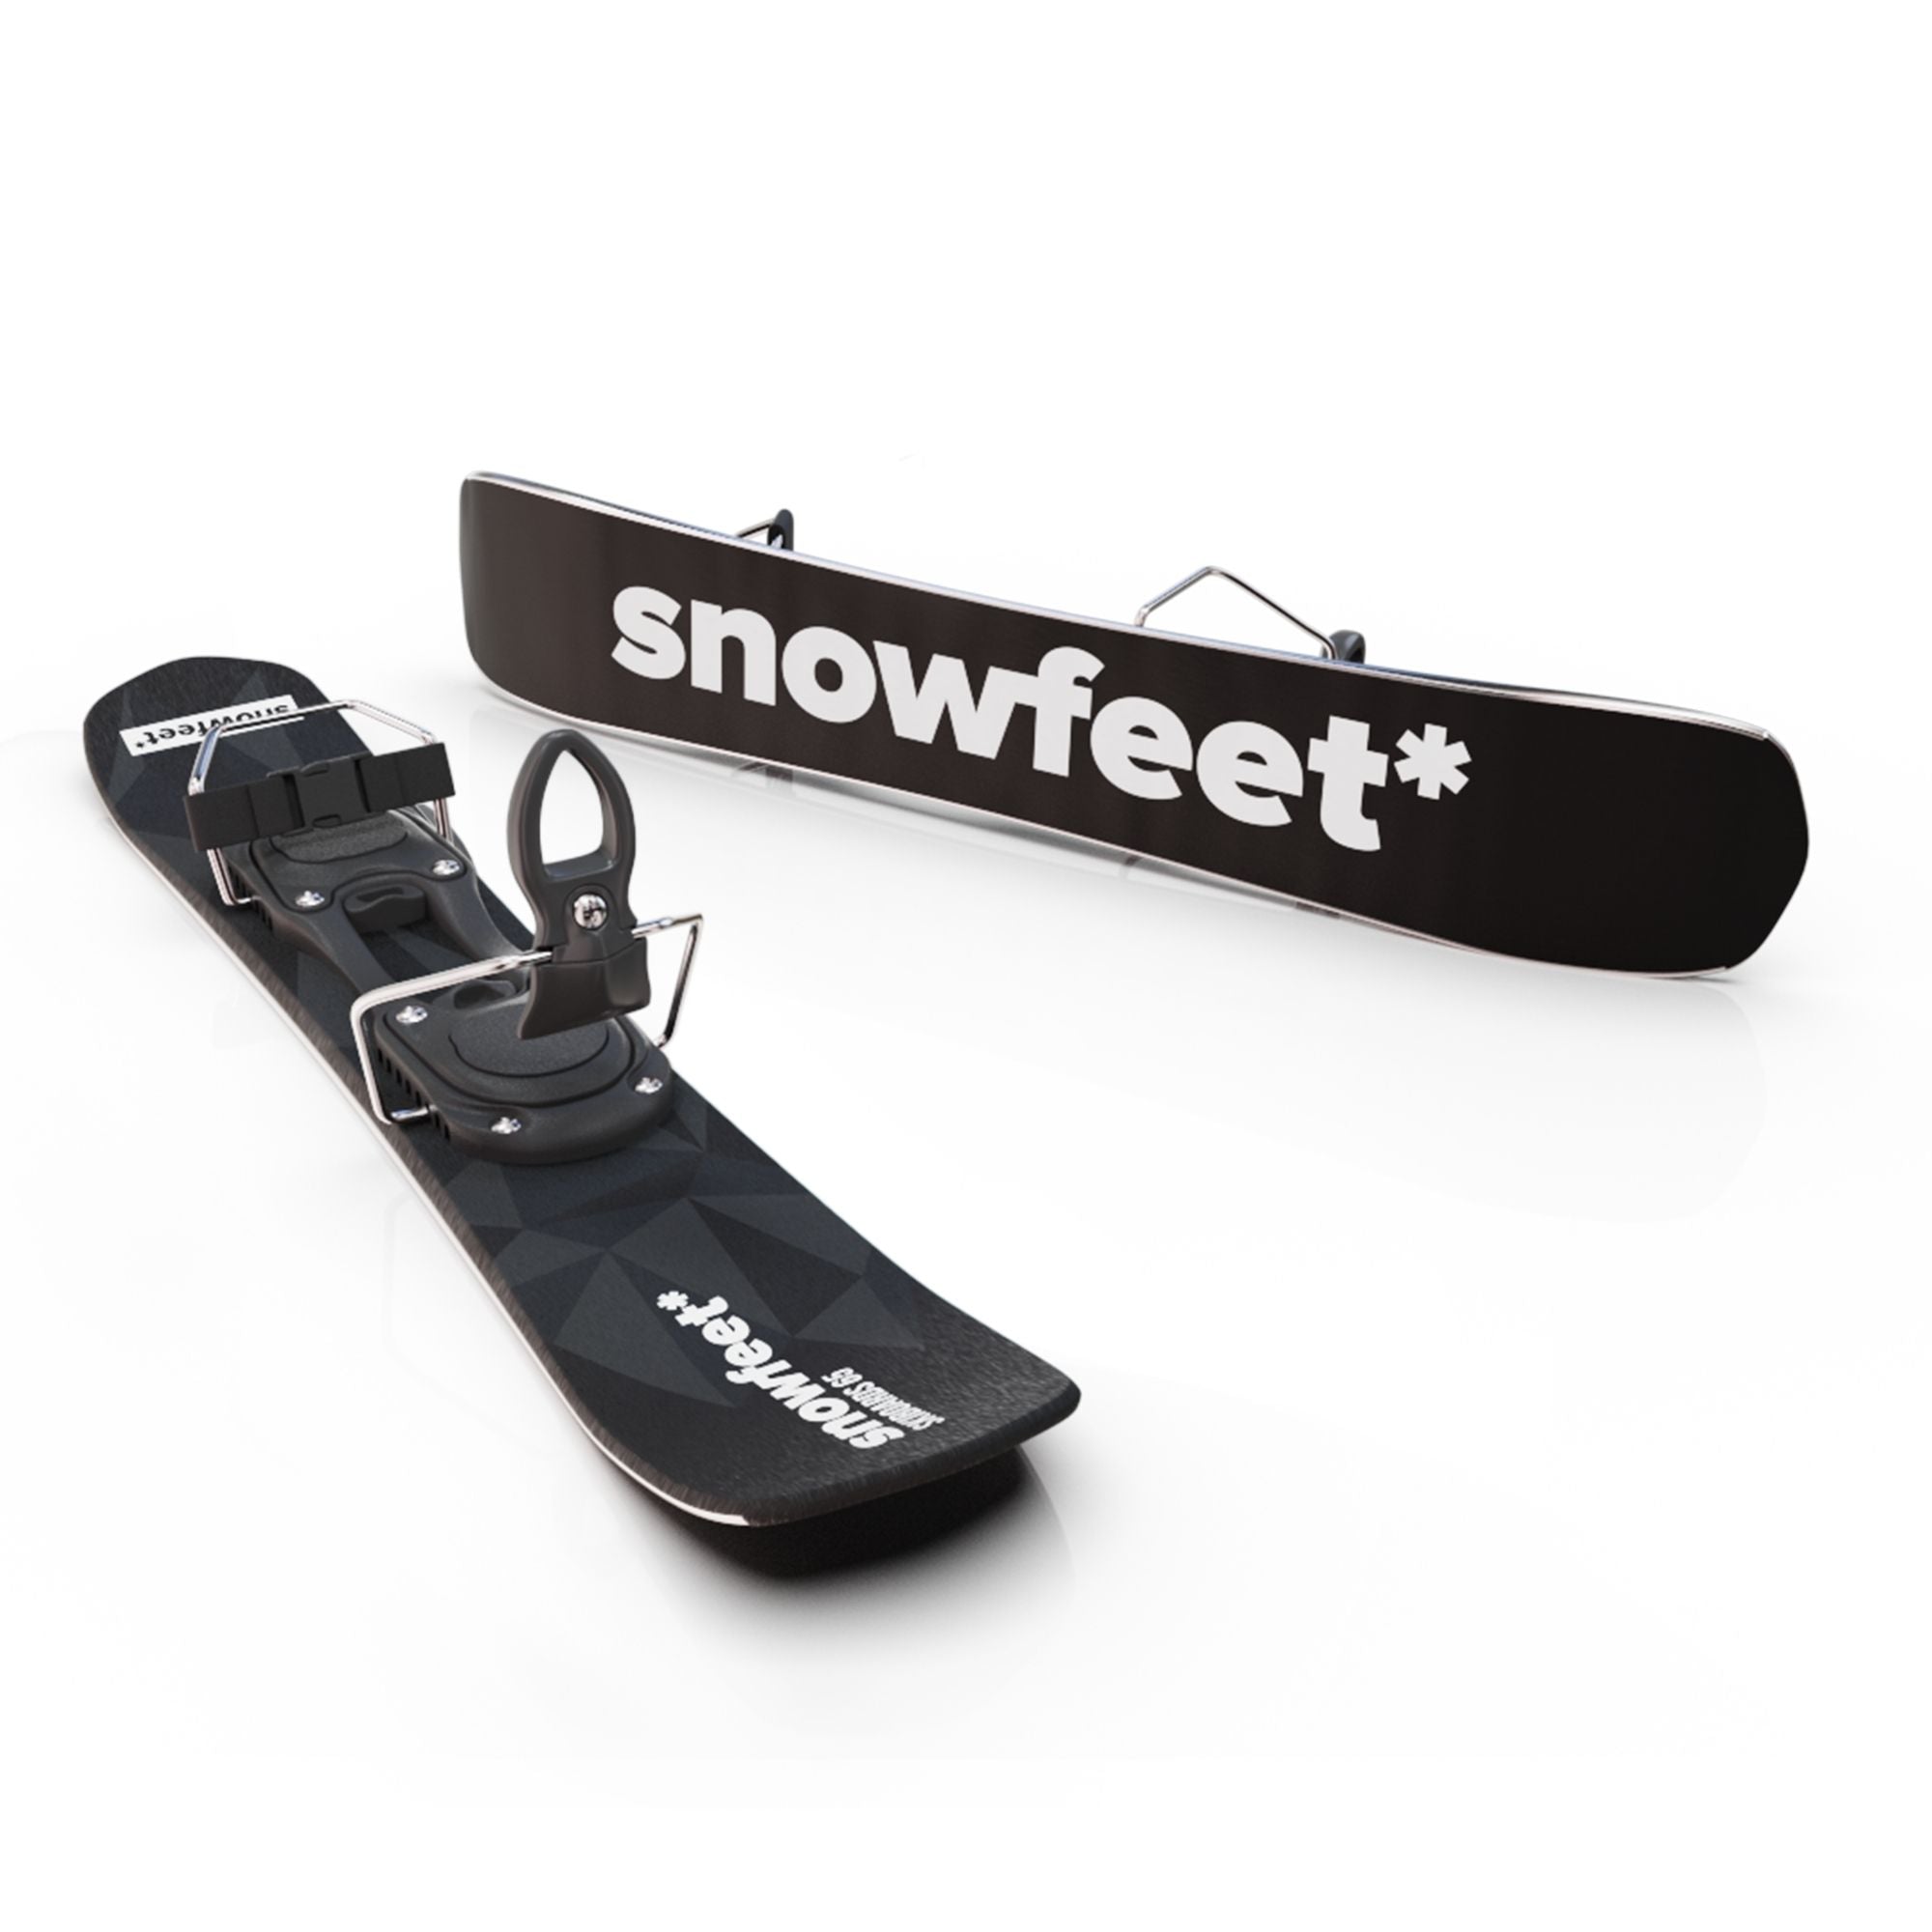 snowfeet-snowblades-for-ski-boots-black-skiboards-shortski